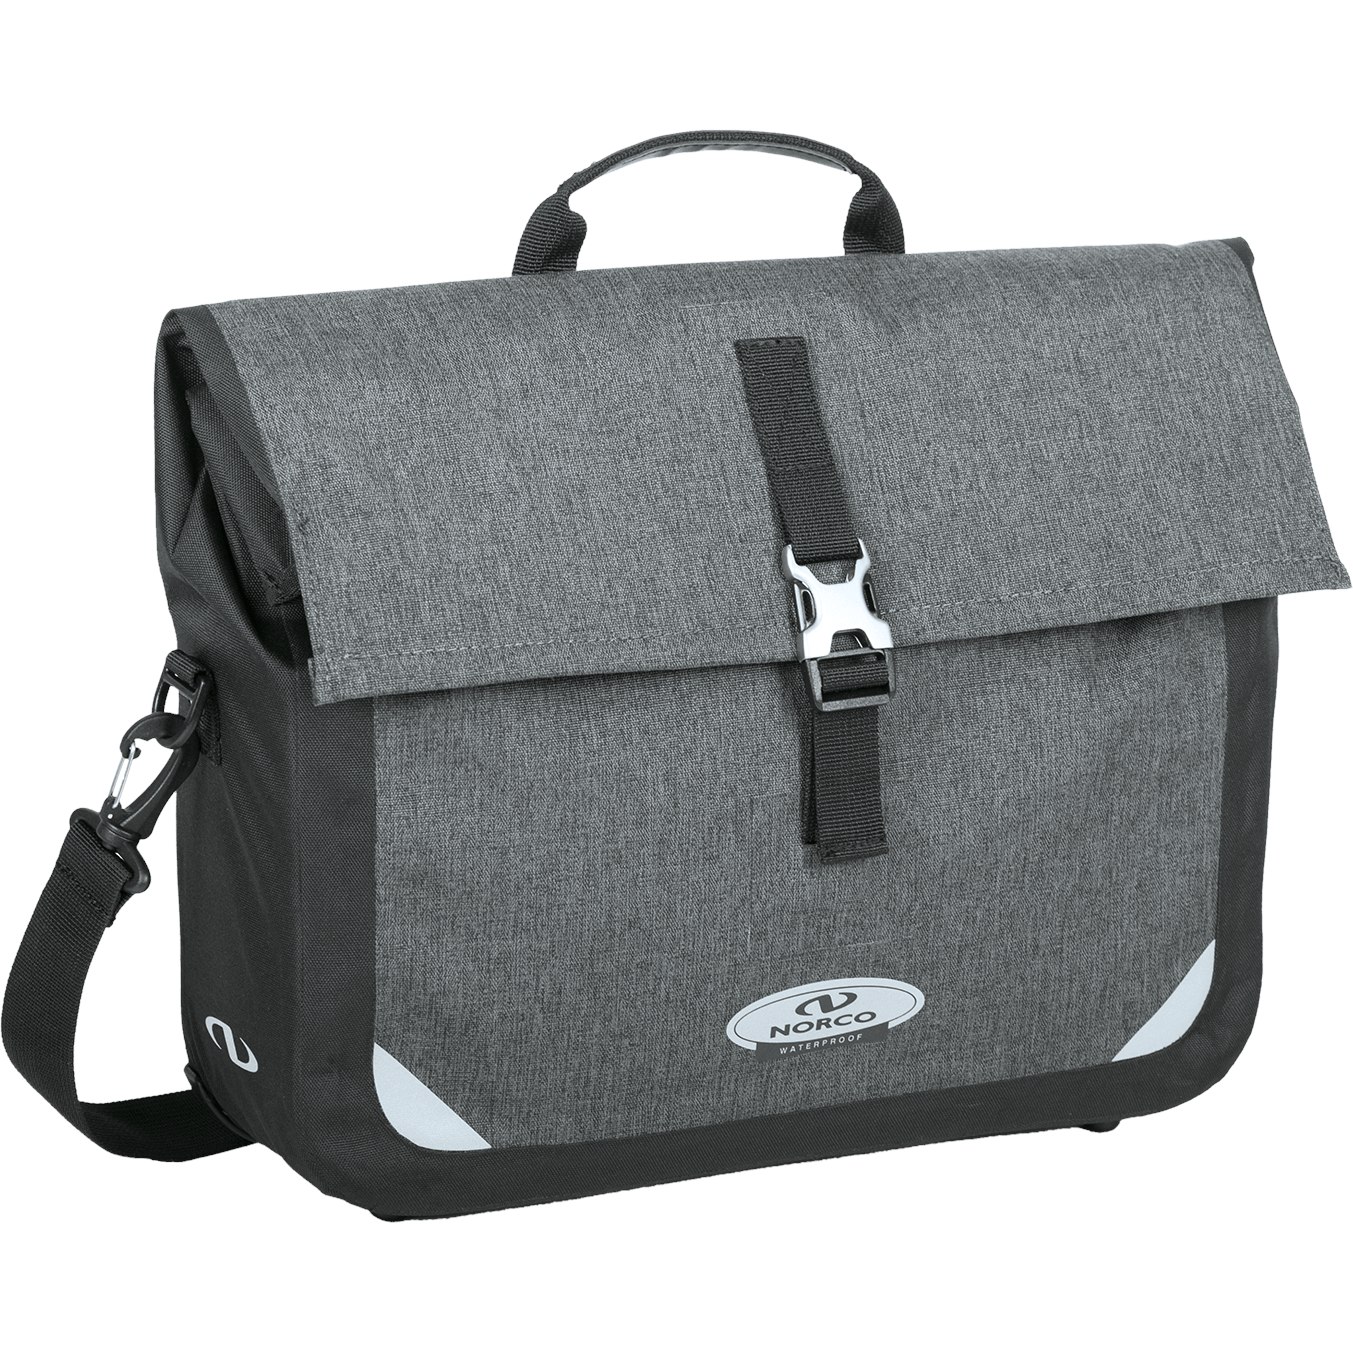 Productfoto van Norco Kilmore Commuter Bag 0223KS - 12.5L - tweed grey / black